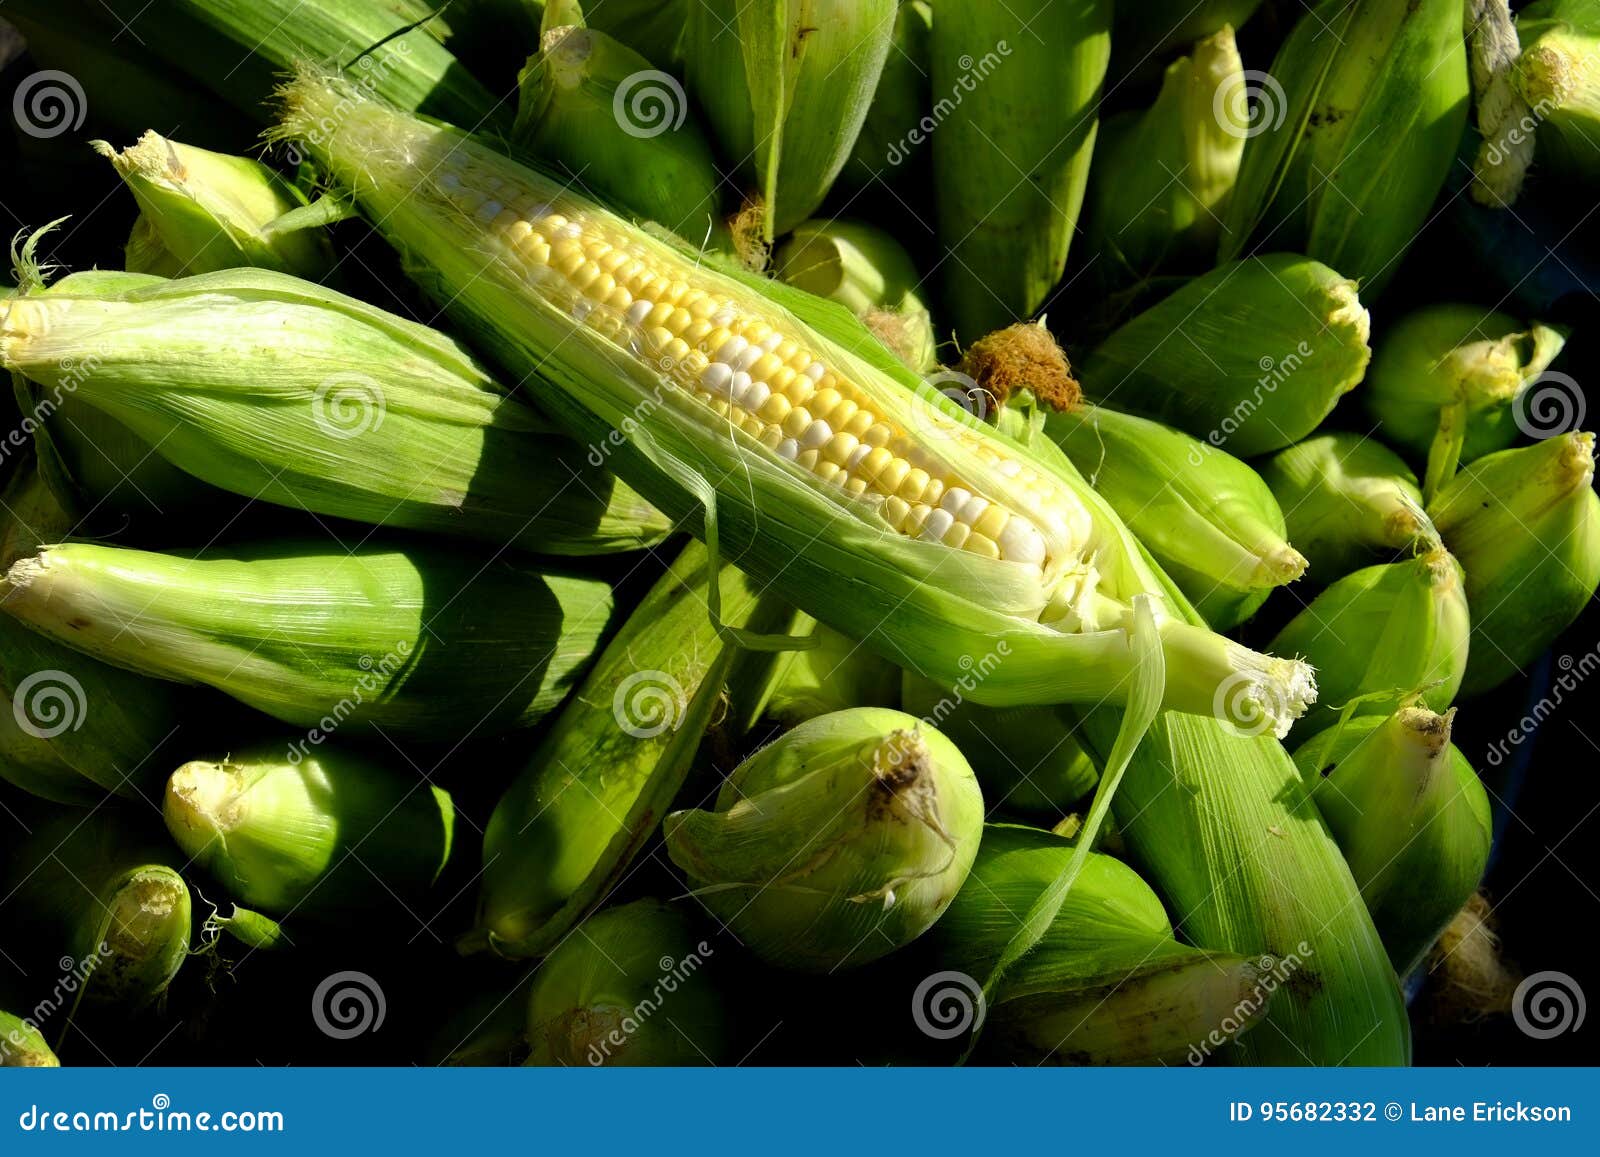 fresh produce corn on the cob organic farmer& x27;s market for sale